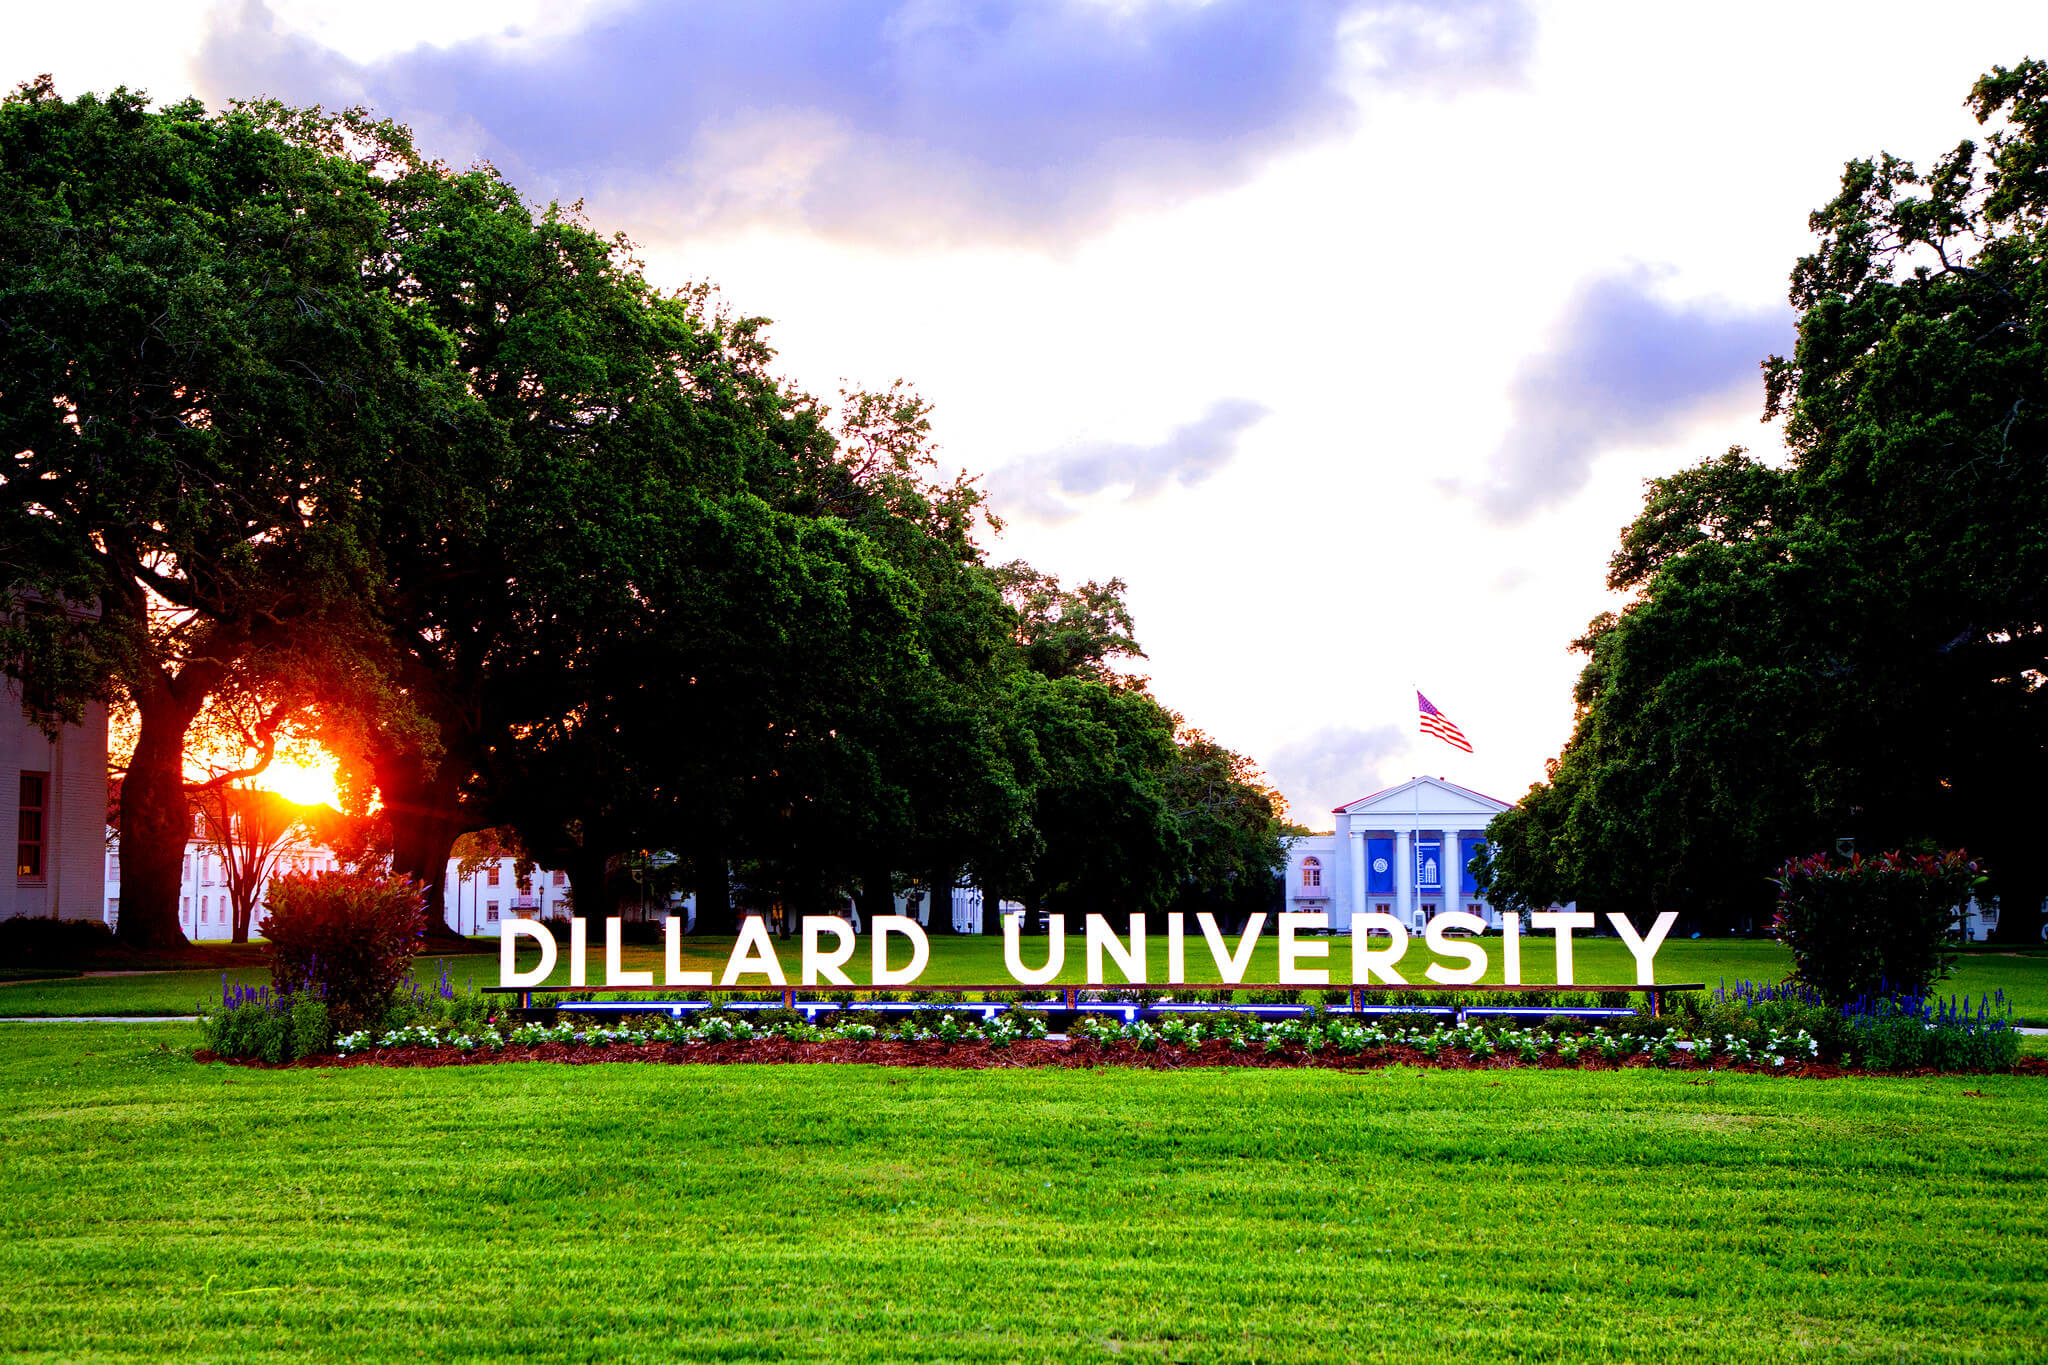 Dillard University campus